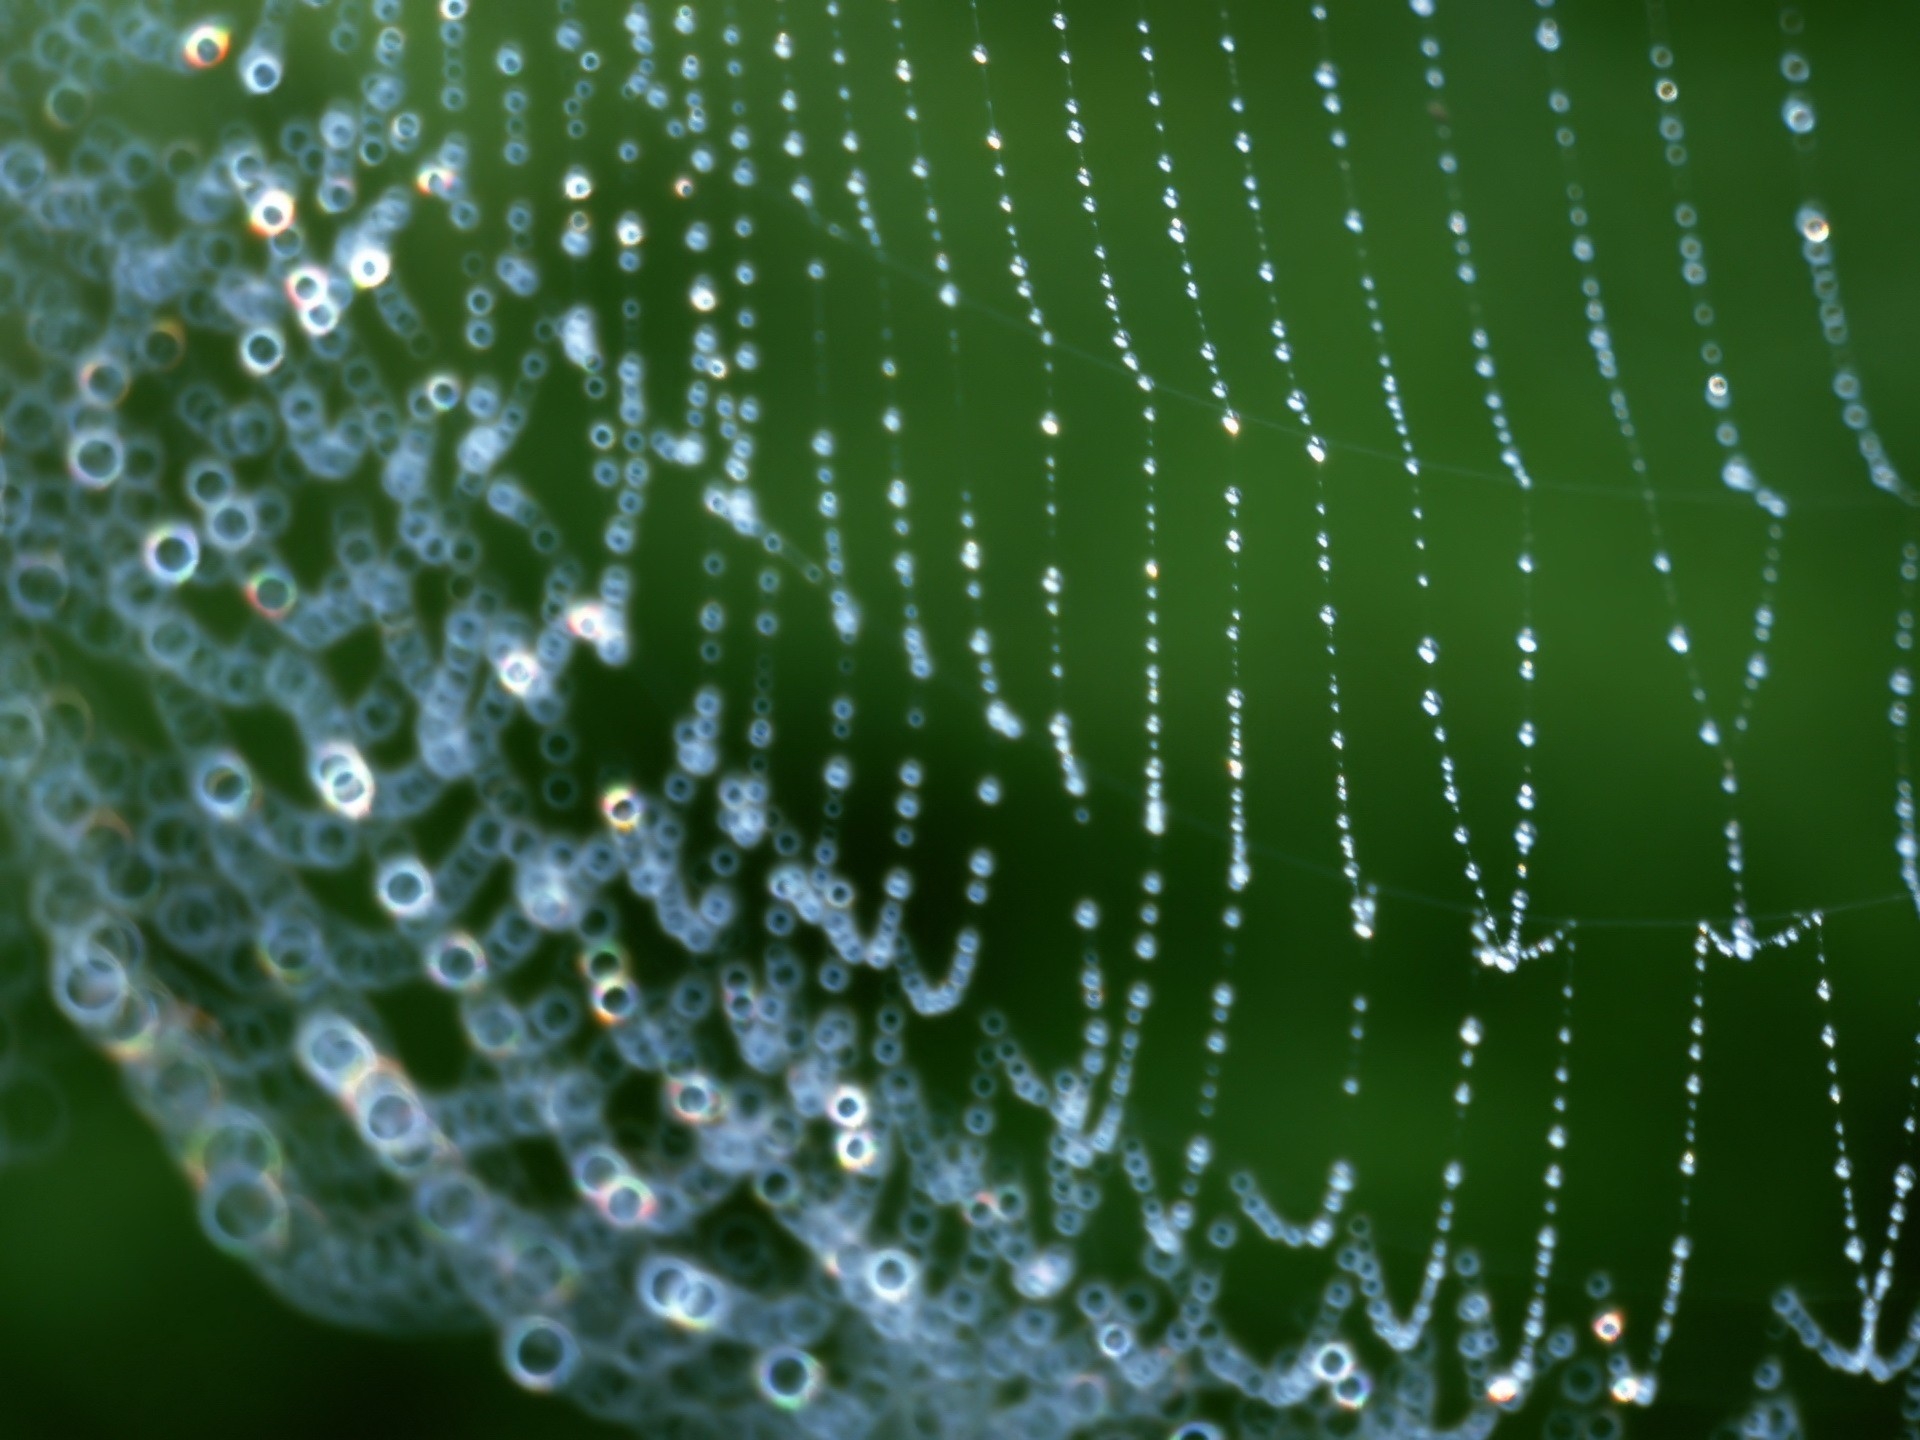 web, drops, macro, dew, net High Definition image